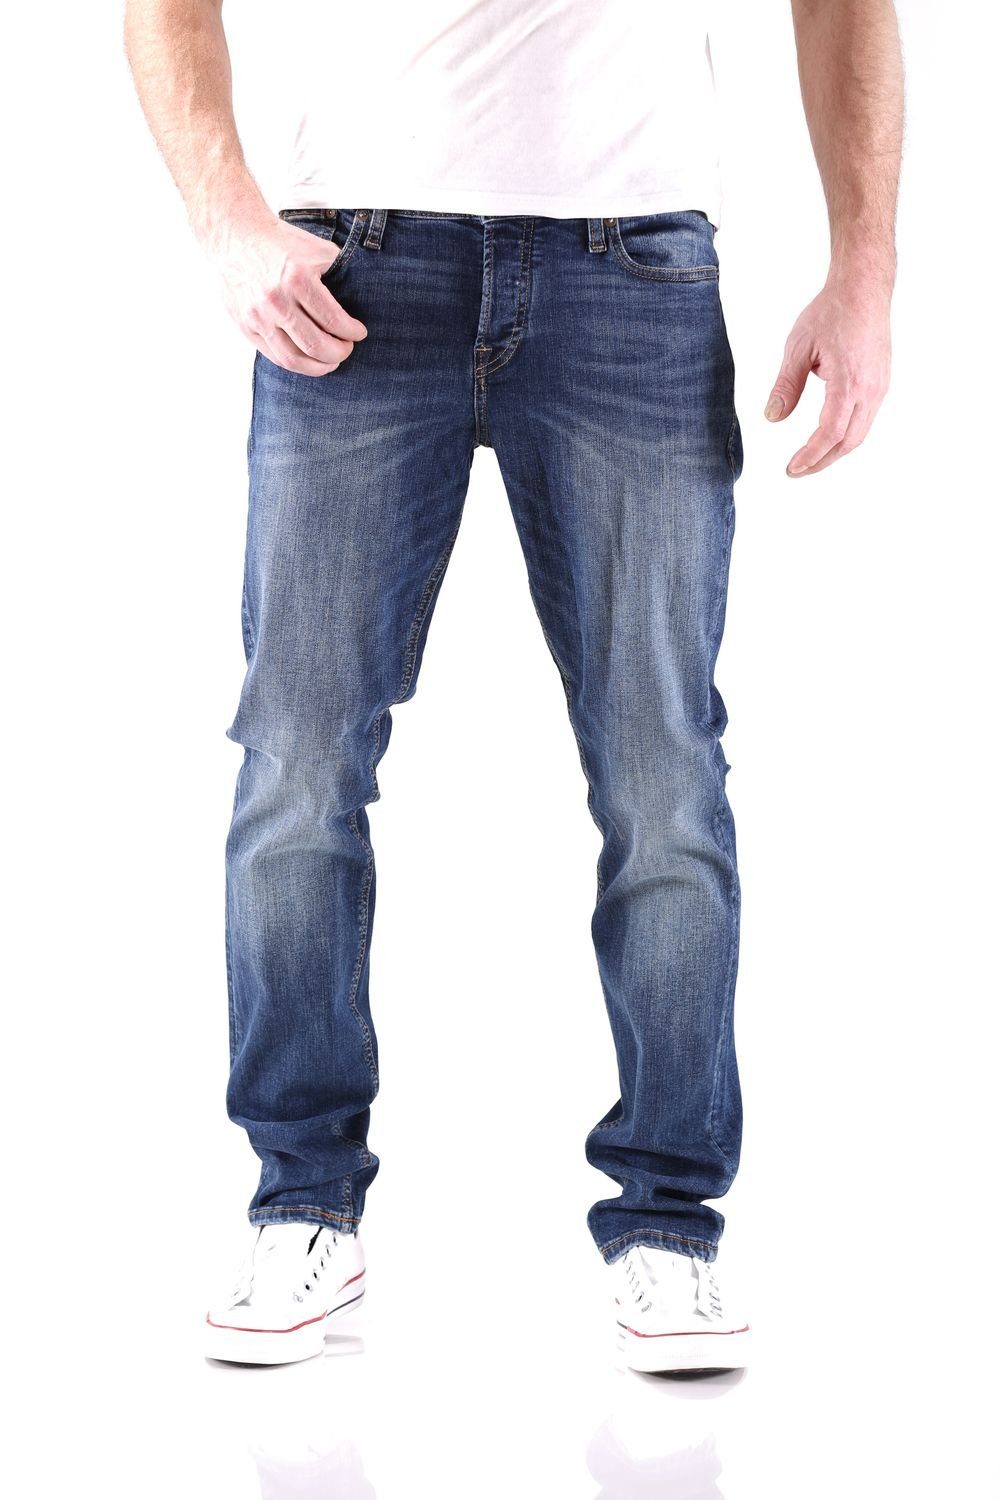 Jack & Comfort Jeans Jack Herren Blau Comfort-fit-Jeans Jones 005) Mike Jones Original & (AGI Fit